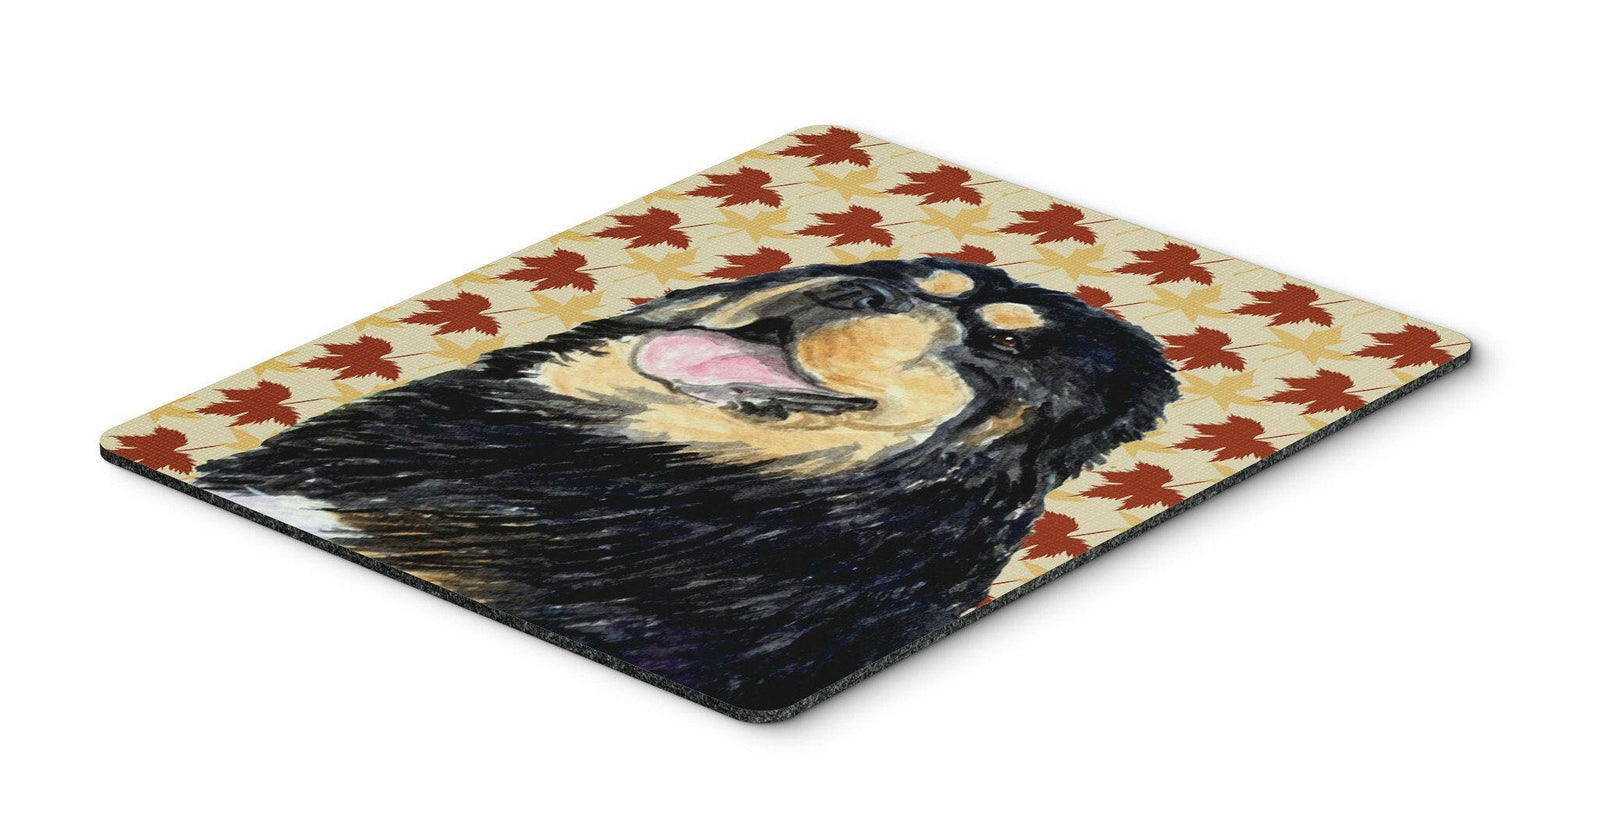 Tibetan Mastiff Fall Leaves Portrait Mouse Pad, Hot Pad or Trivet by Caroline's Treasures